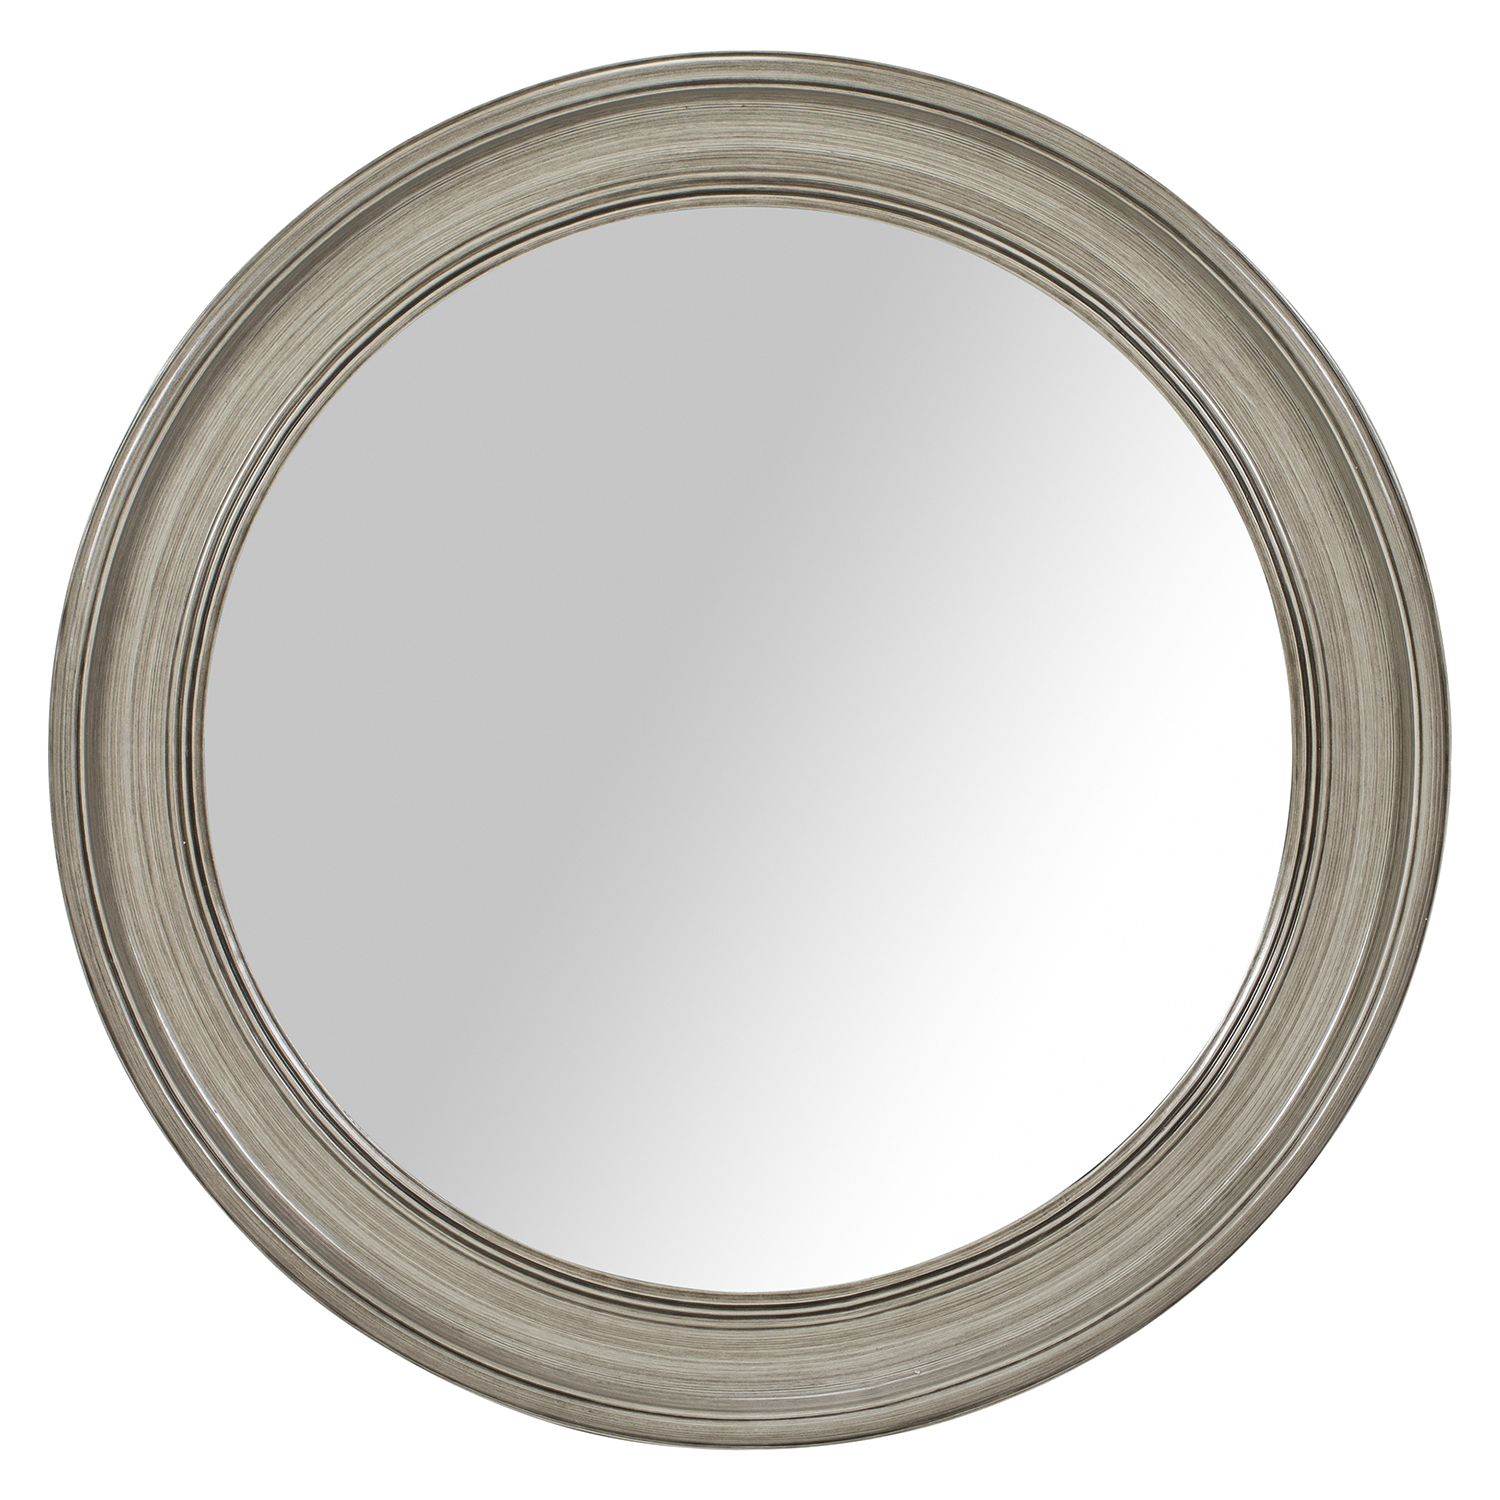 Washed Grey Bevelled Round Mirror 89cm Image